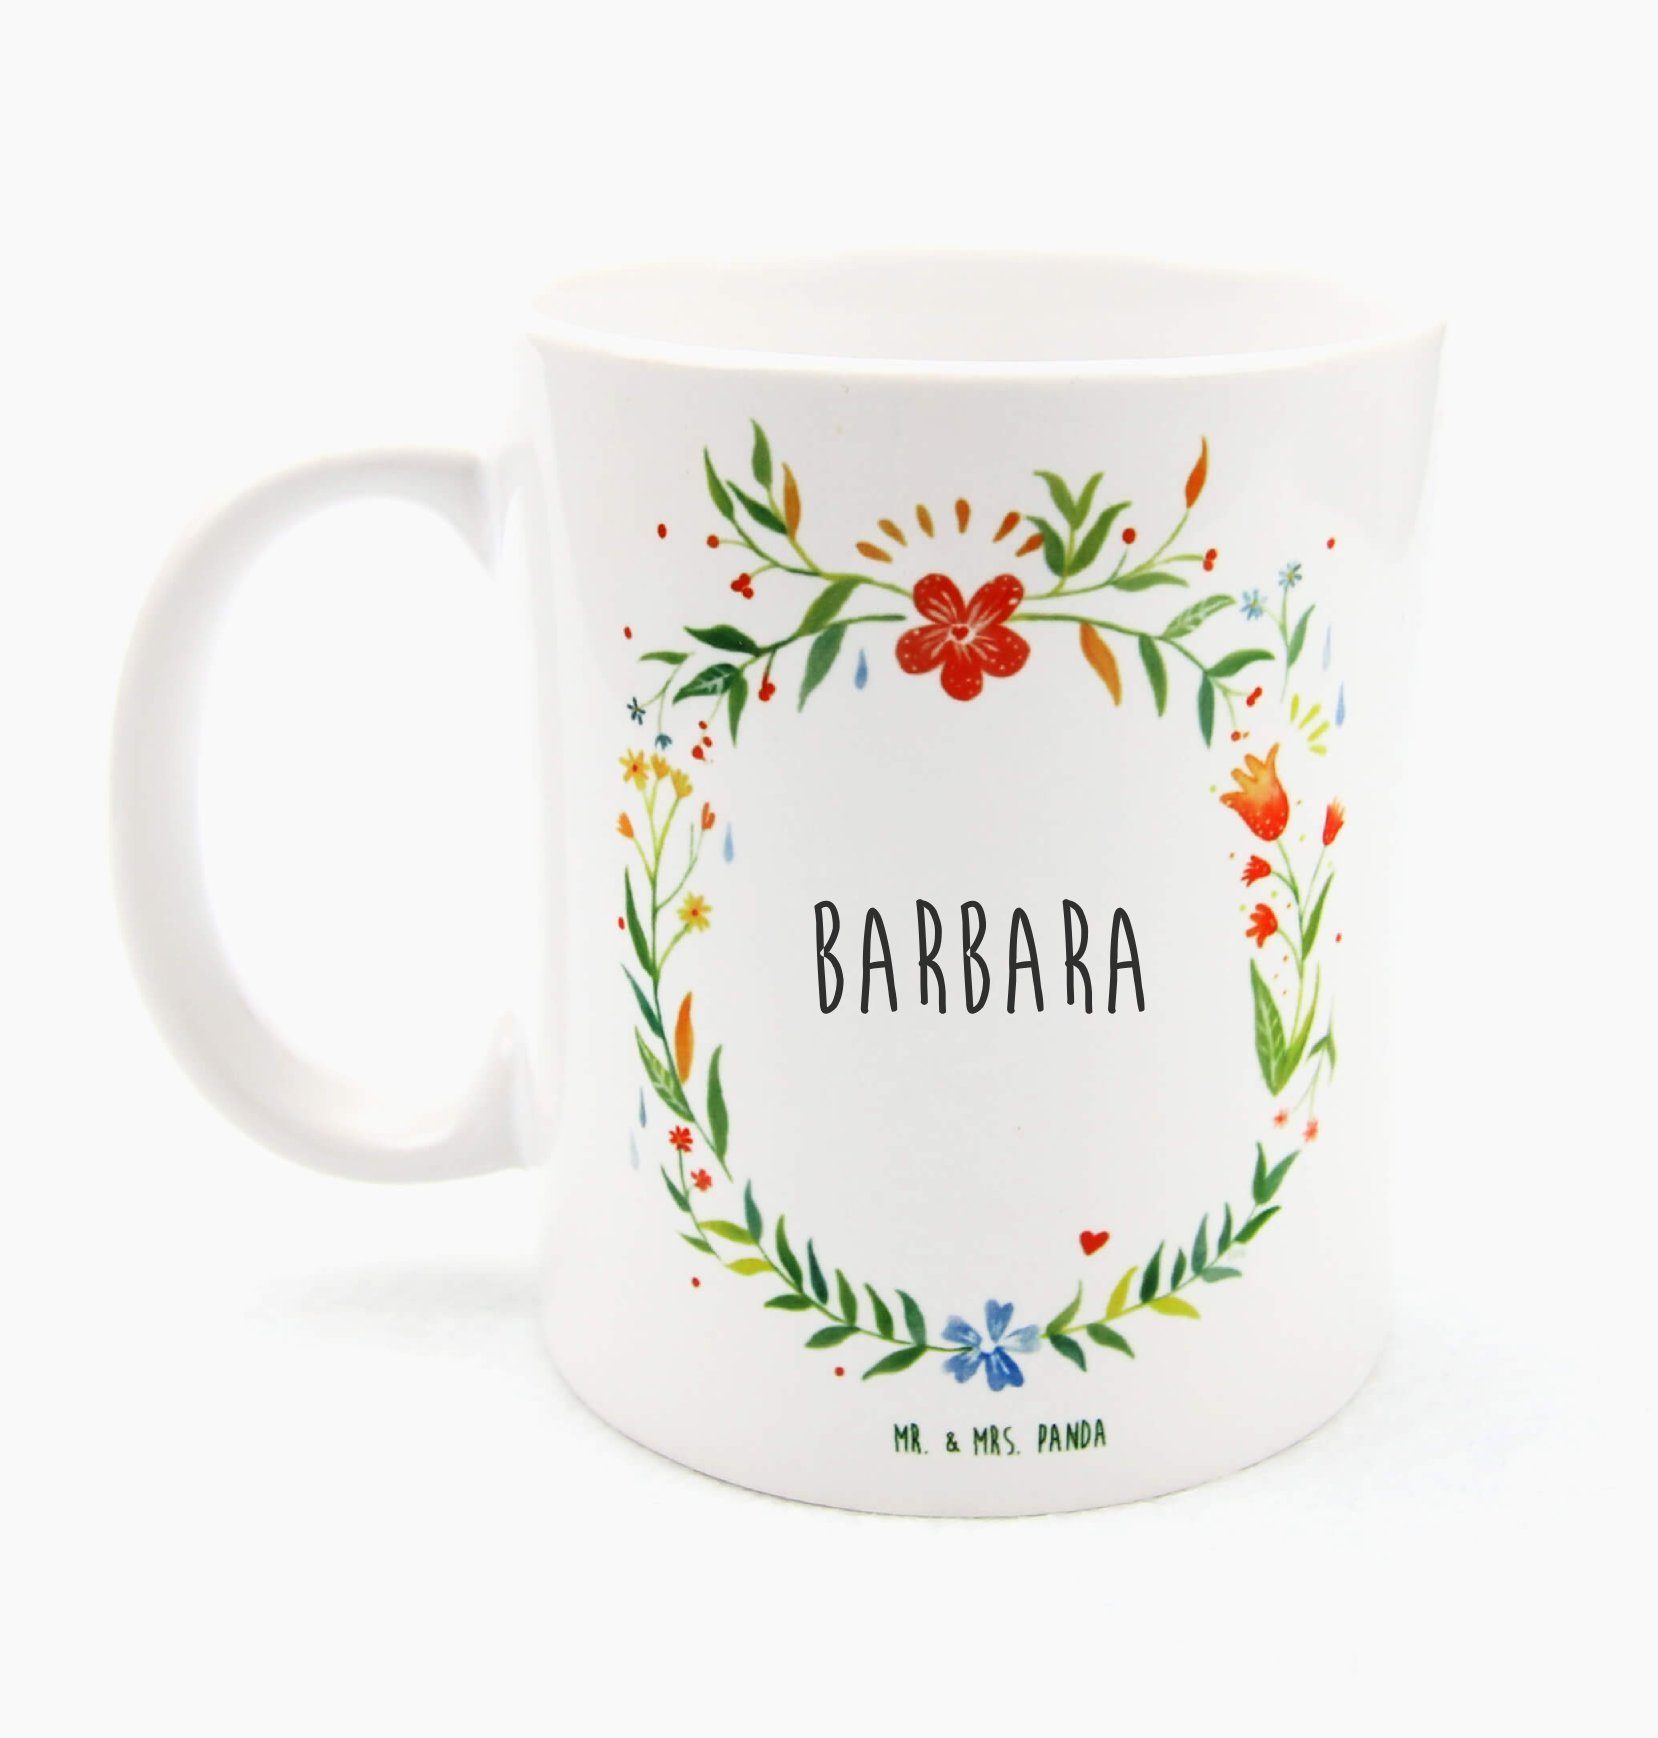 Mr. & Mrs. Panda Tasse Barbara - Geschenk, Porzellantasse, Büro Tasse, Kaffeebecher, Tasse S, Keramik